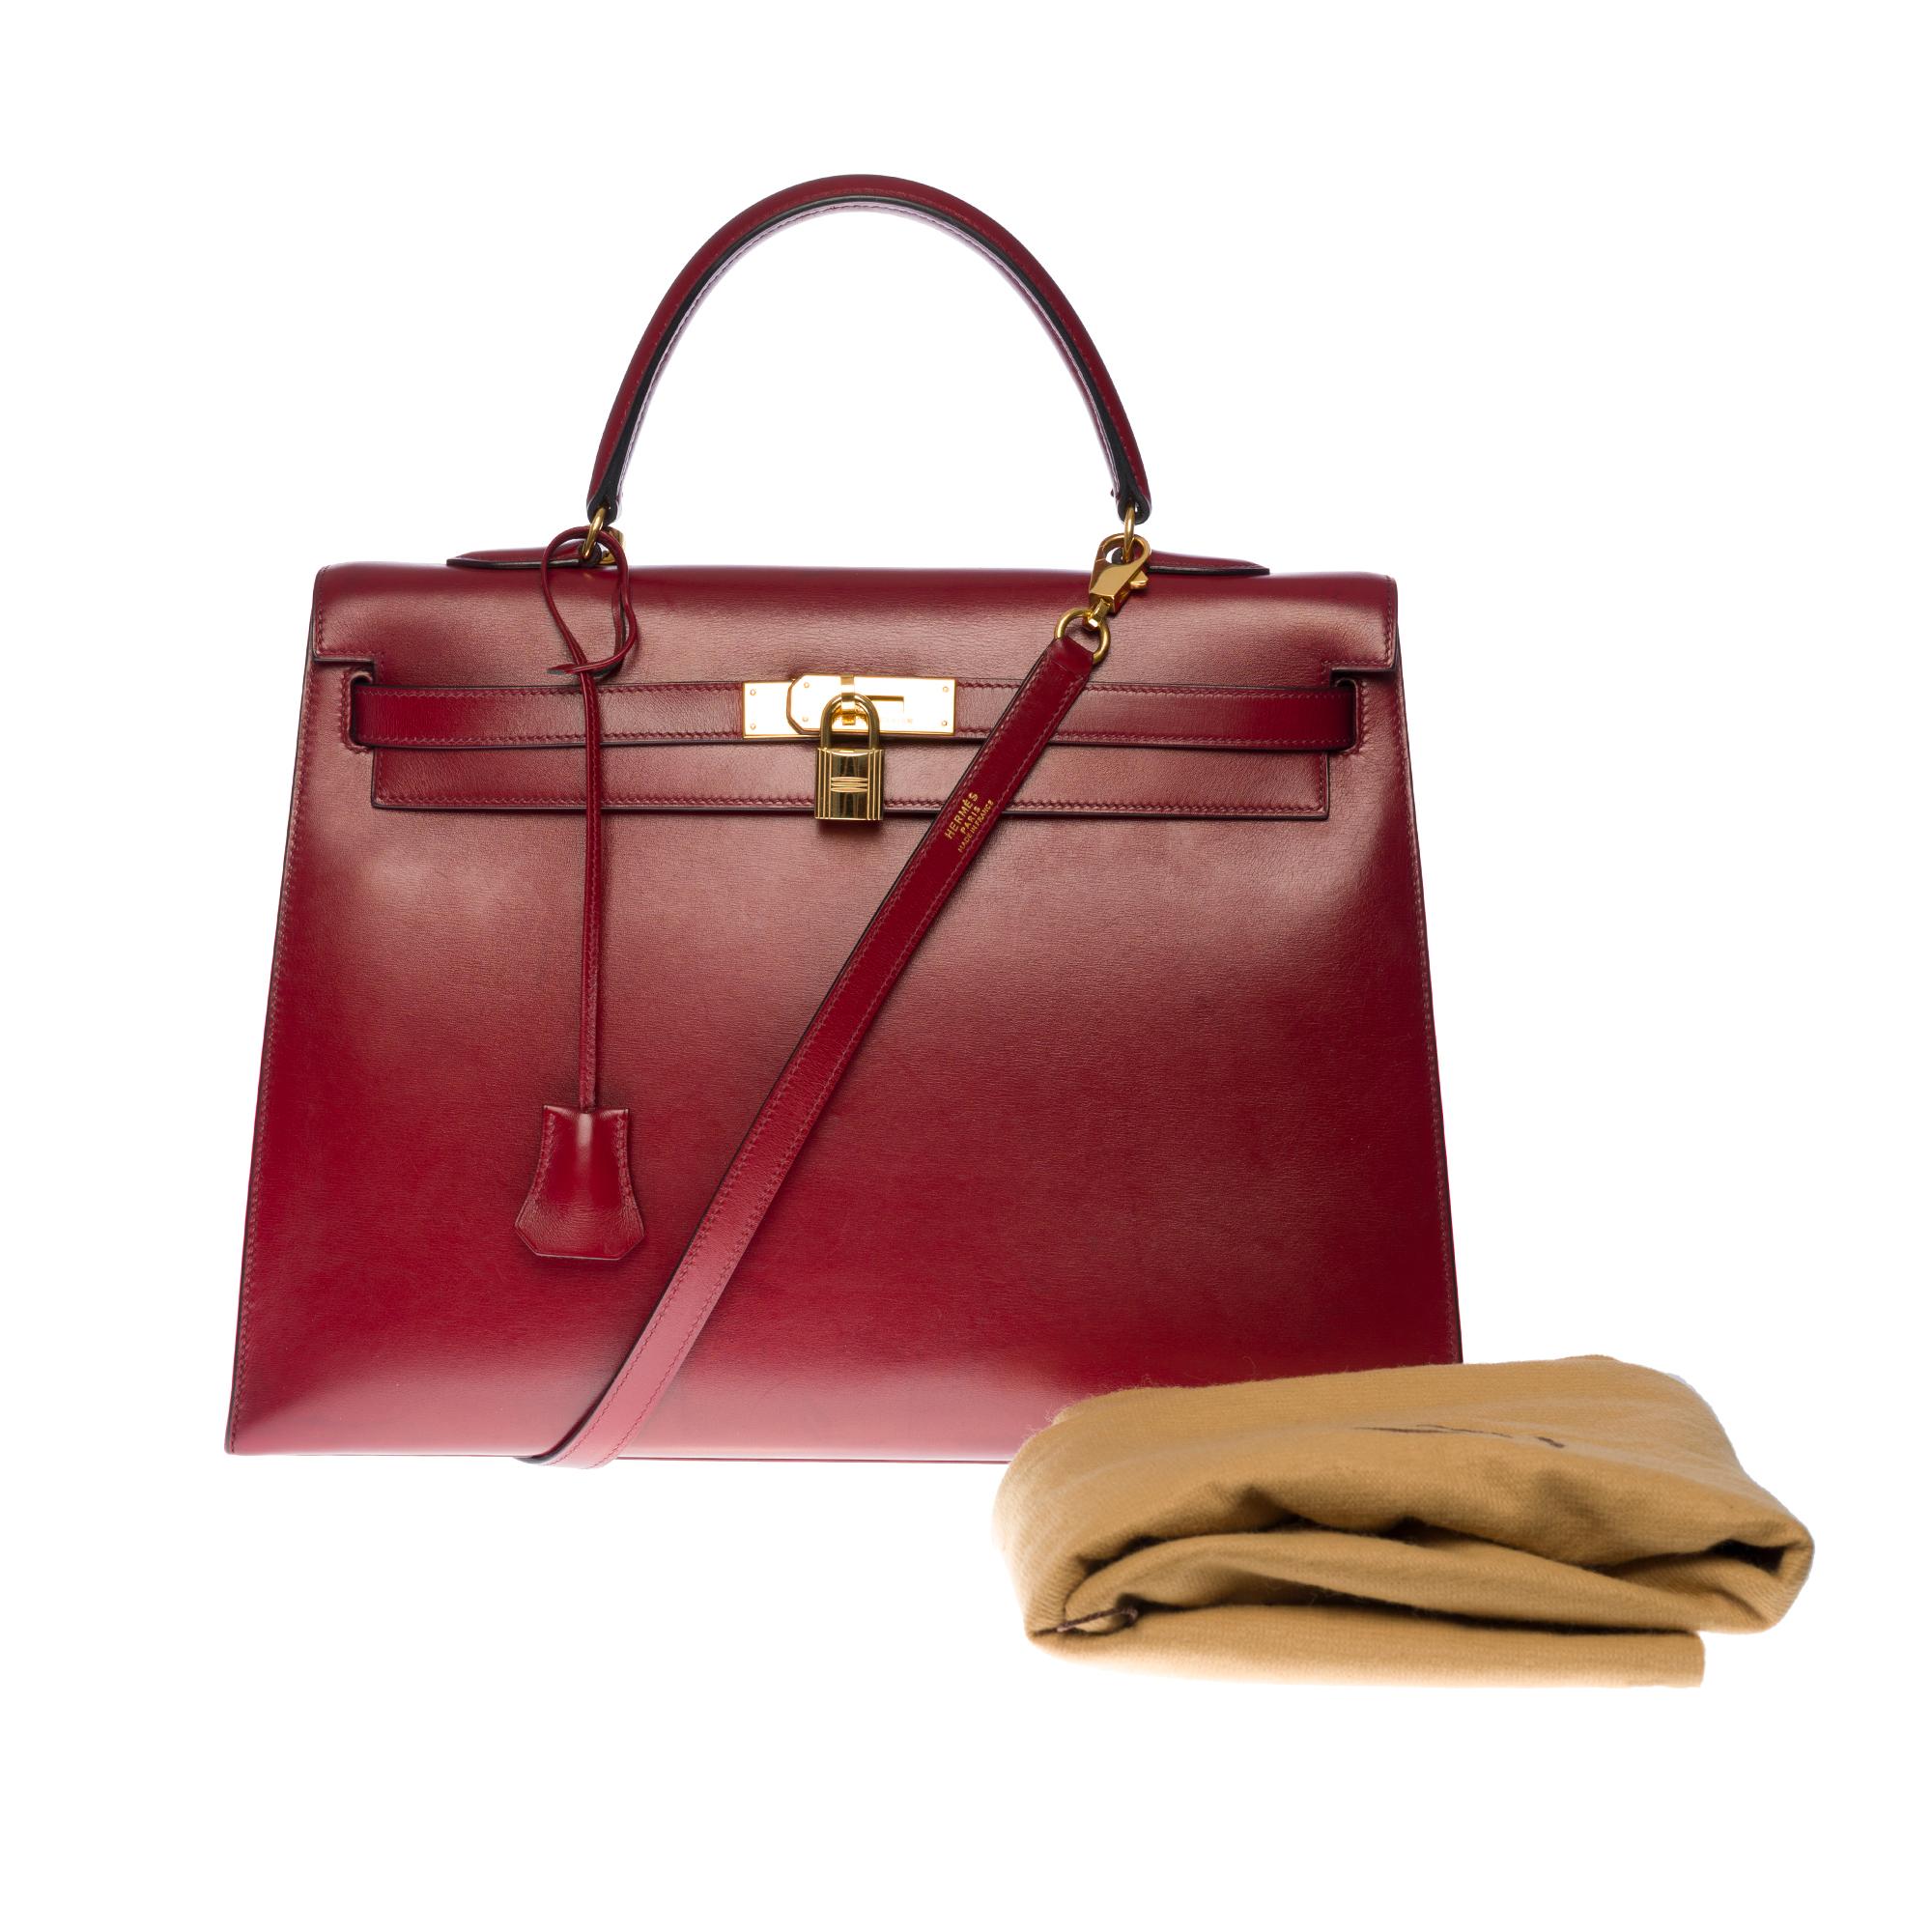 Hermès Kelly 35 sellier strap shoulder bag in burgundy calf leather, GHW 6